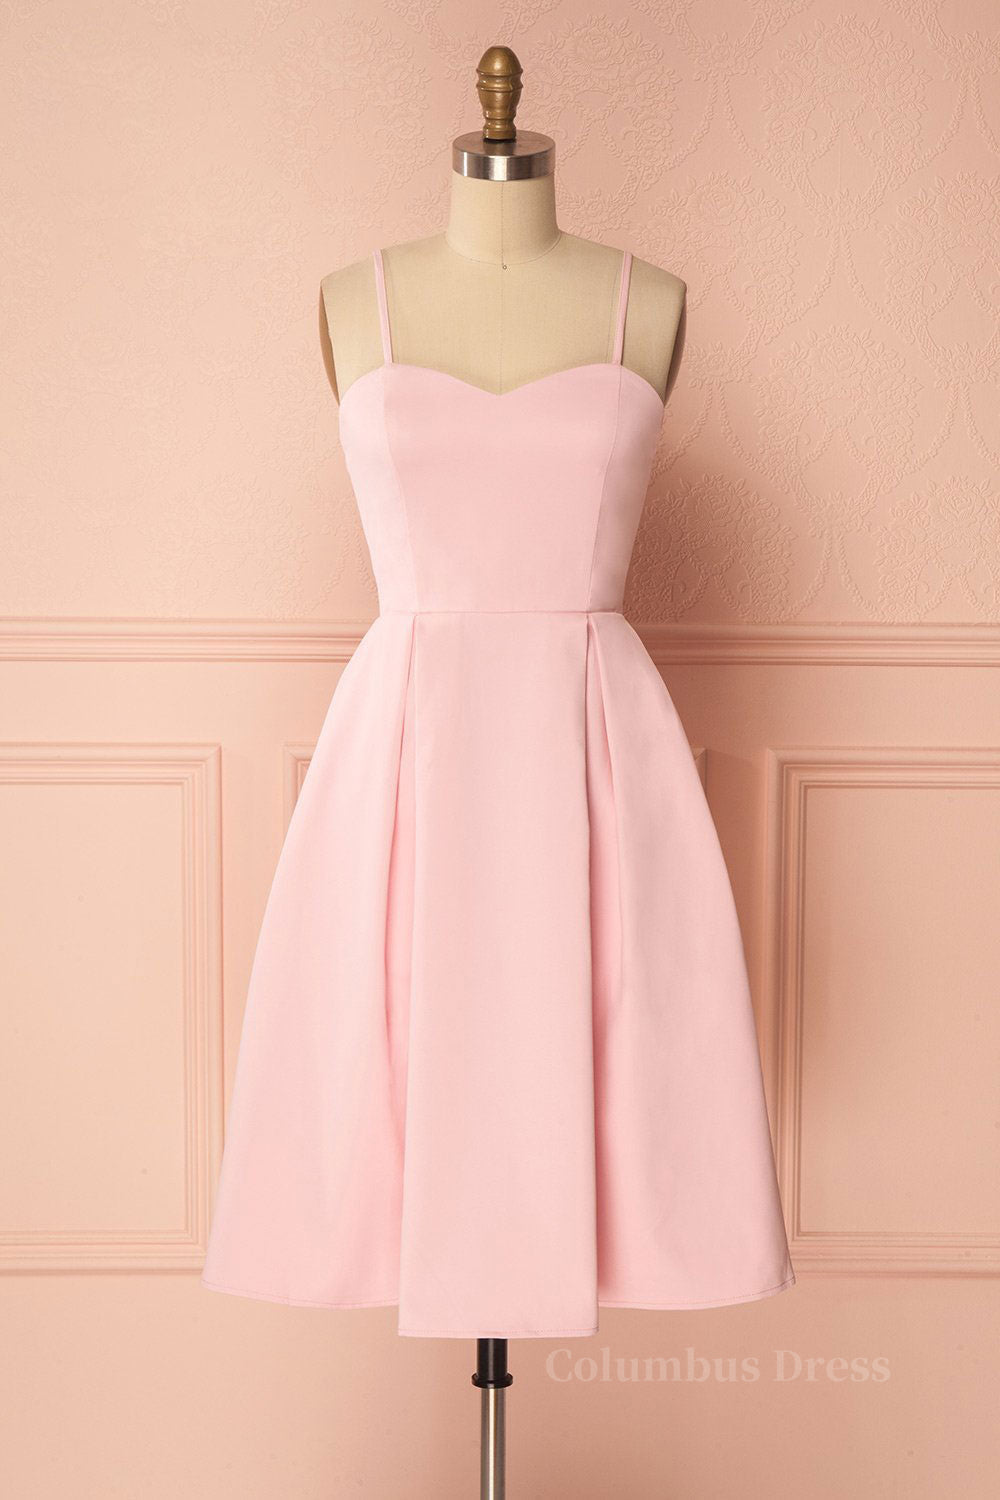 Homecoming Dress 2026, Pink satin short prom dress, pink homecoming dress